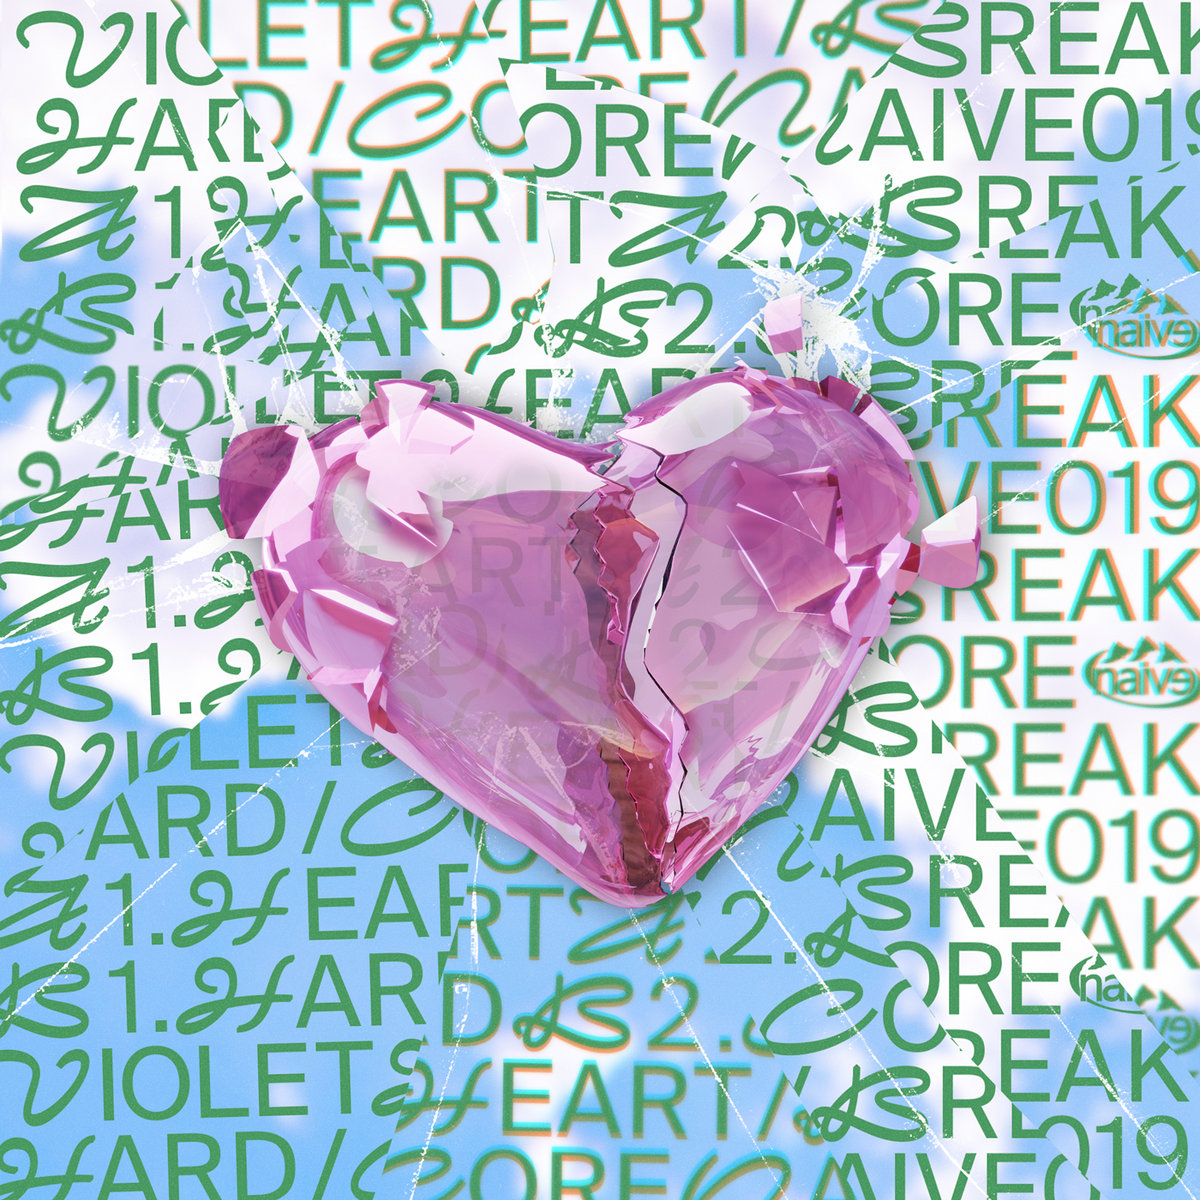 Violet - HEART/BREAK HARD/CORE by Violet